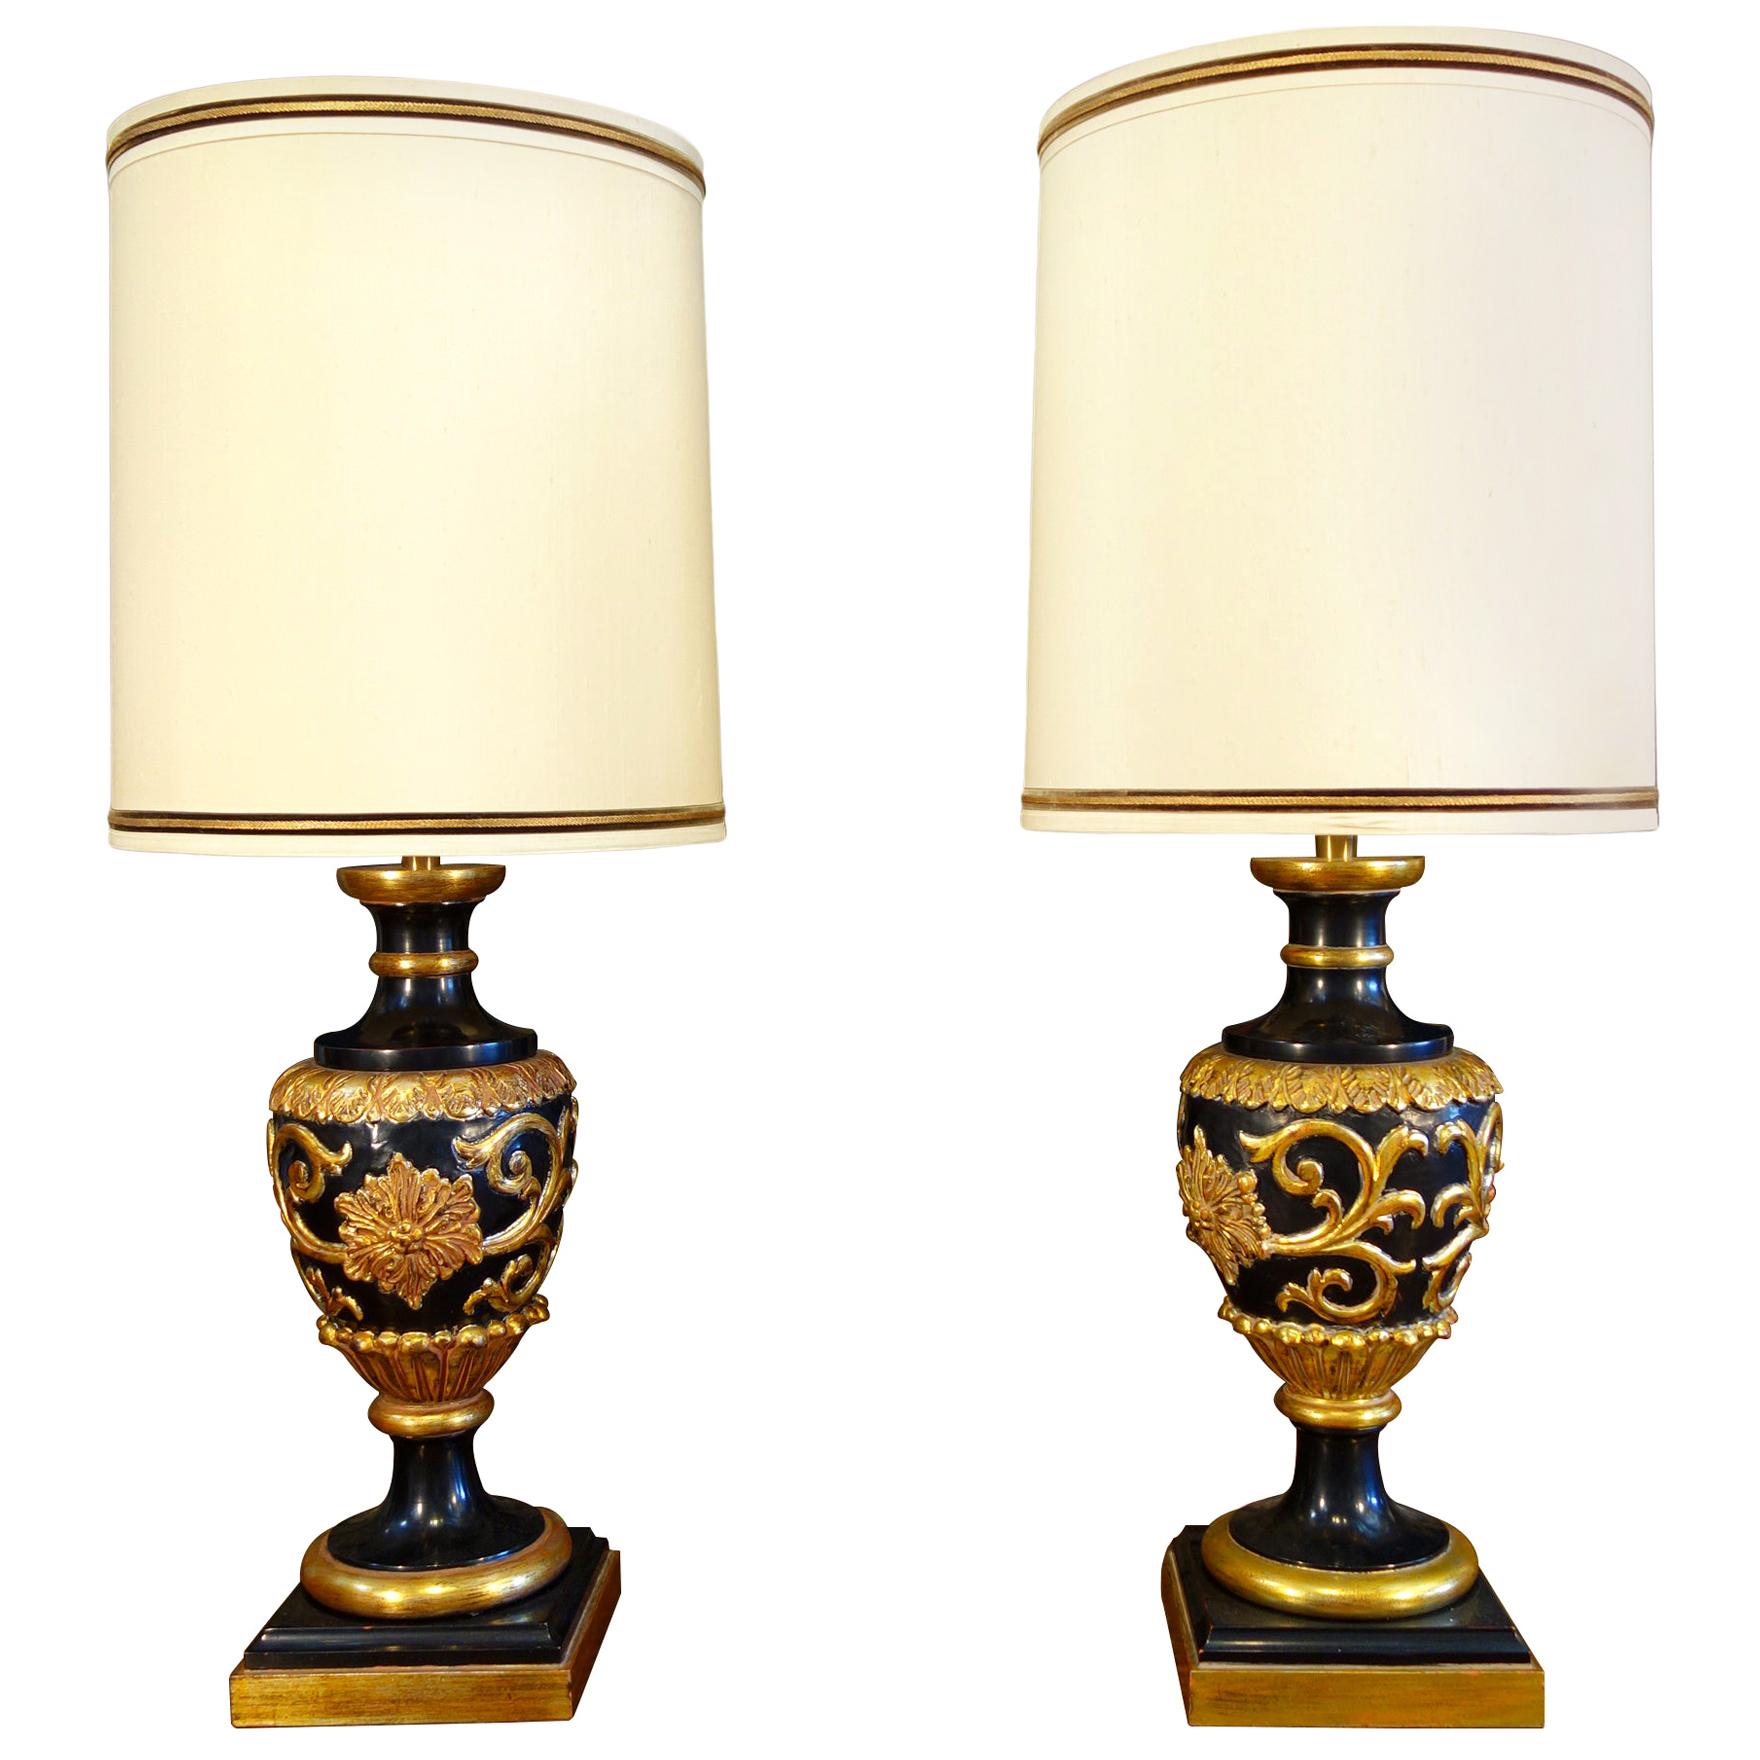 Italian Renaissance Style Pair of Tall Marbro Gilt Table Lamps, circa 1950